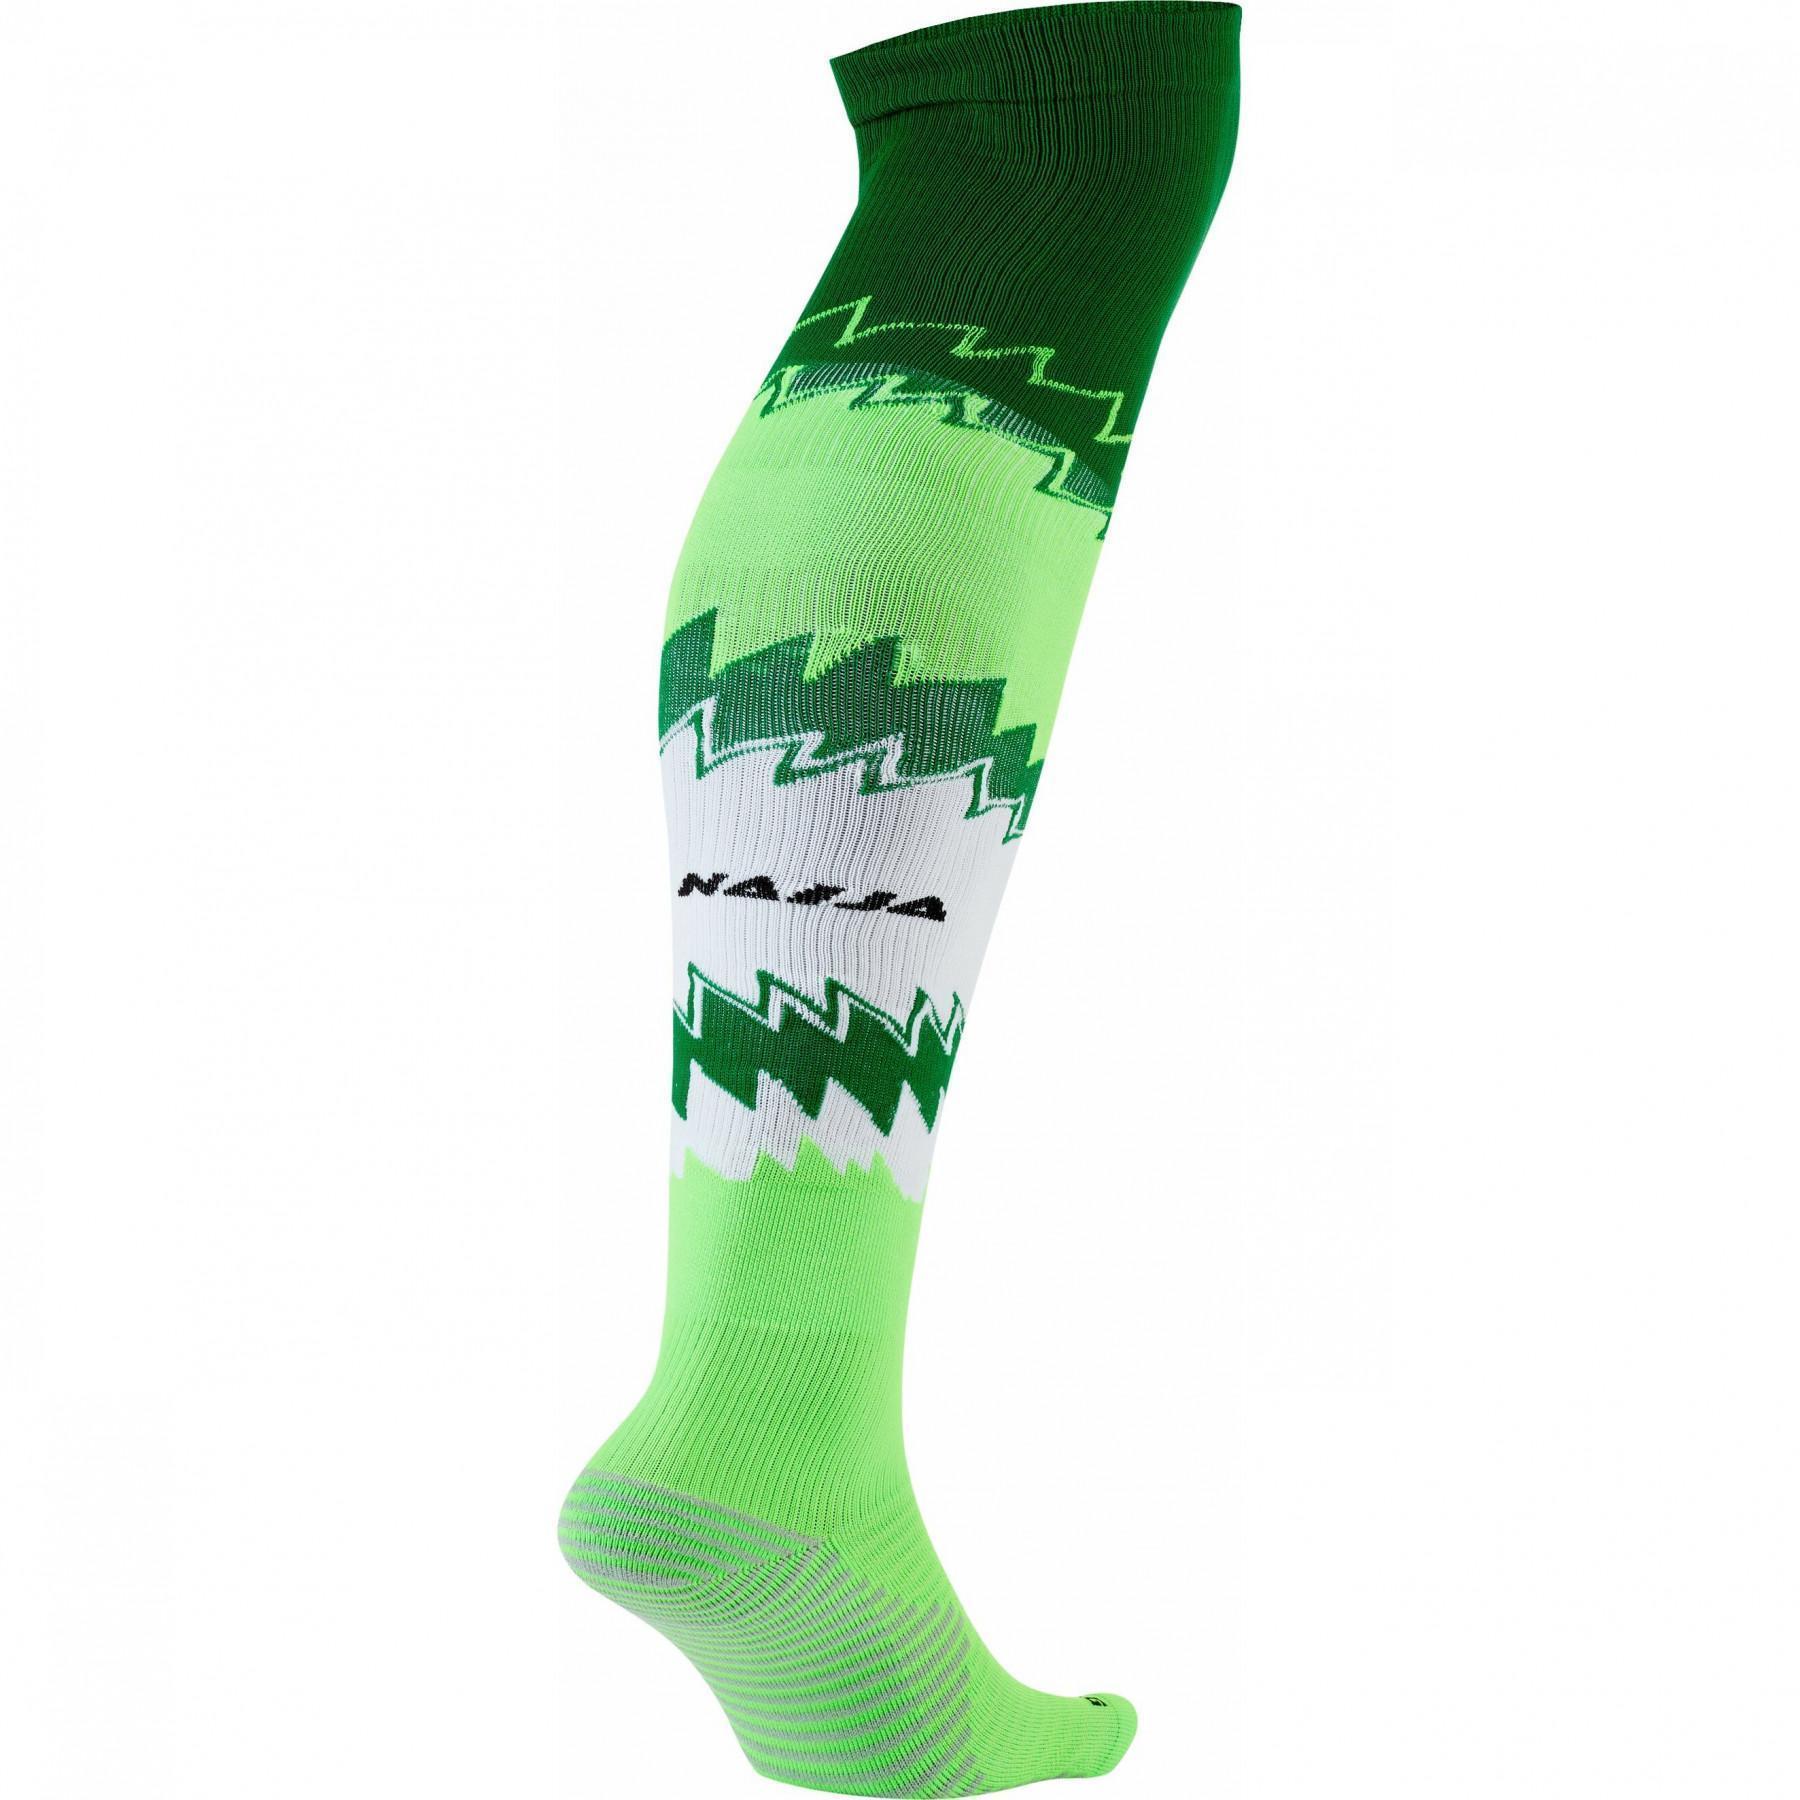 Home socks Nigeria 2020